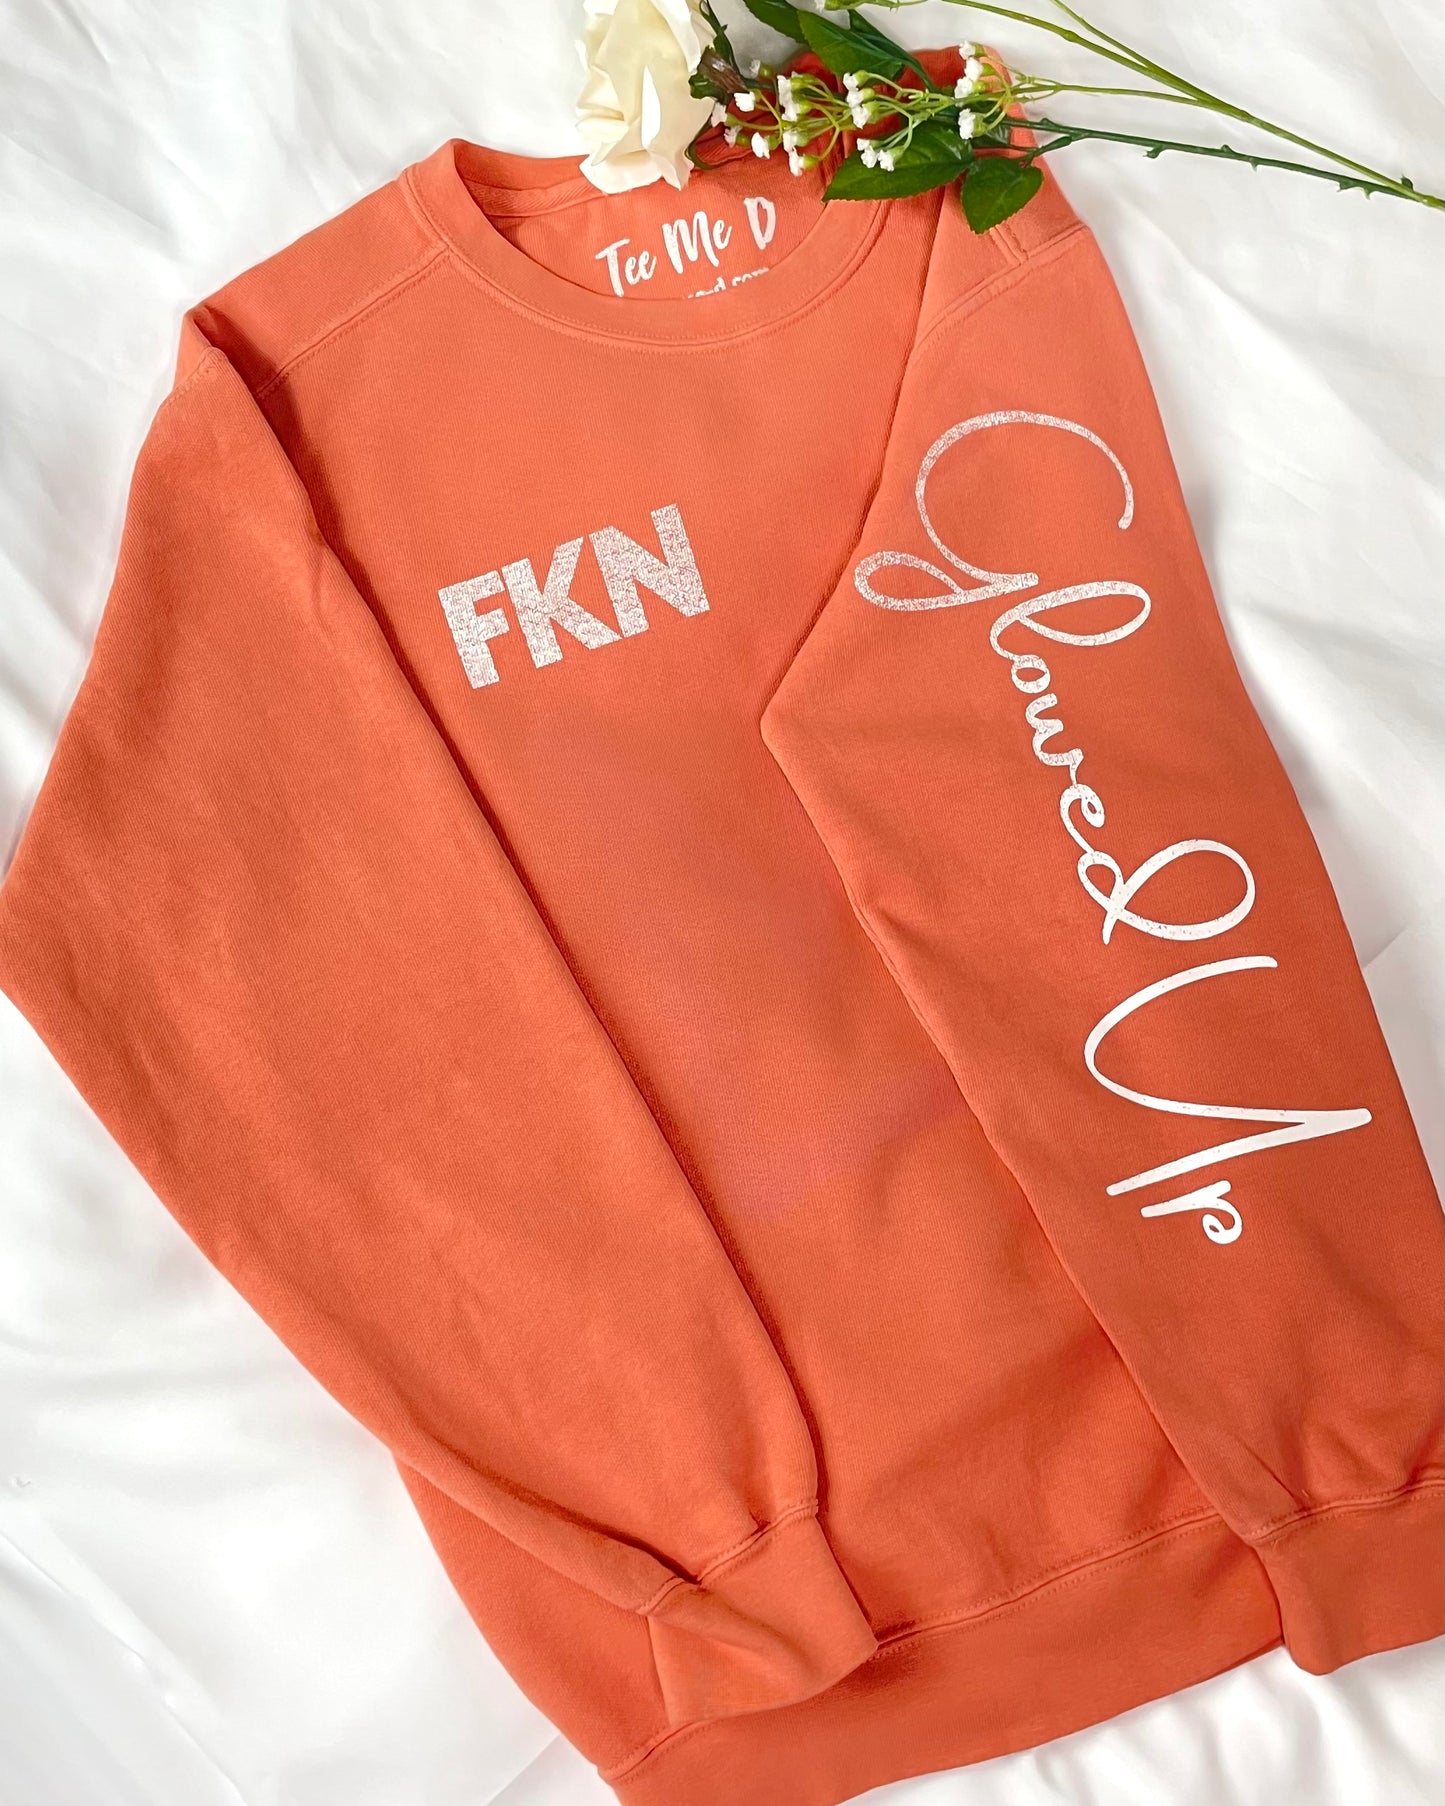 FKN GLOWED UP crewneck sweatshirt (Final Sale)